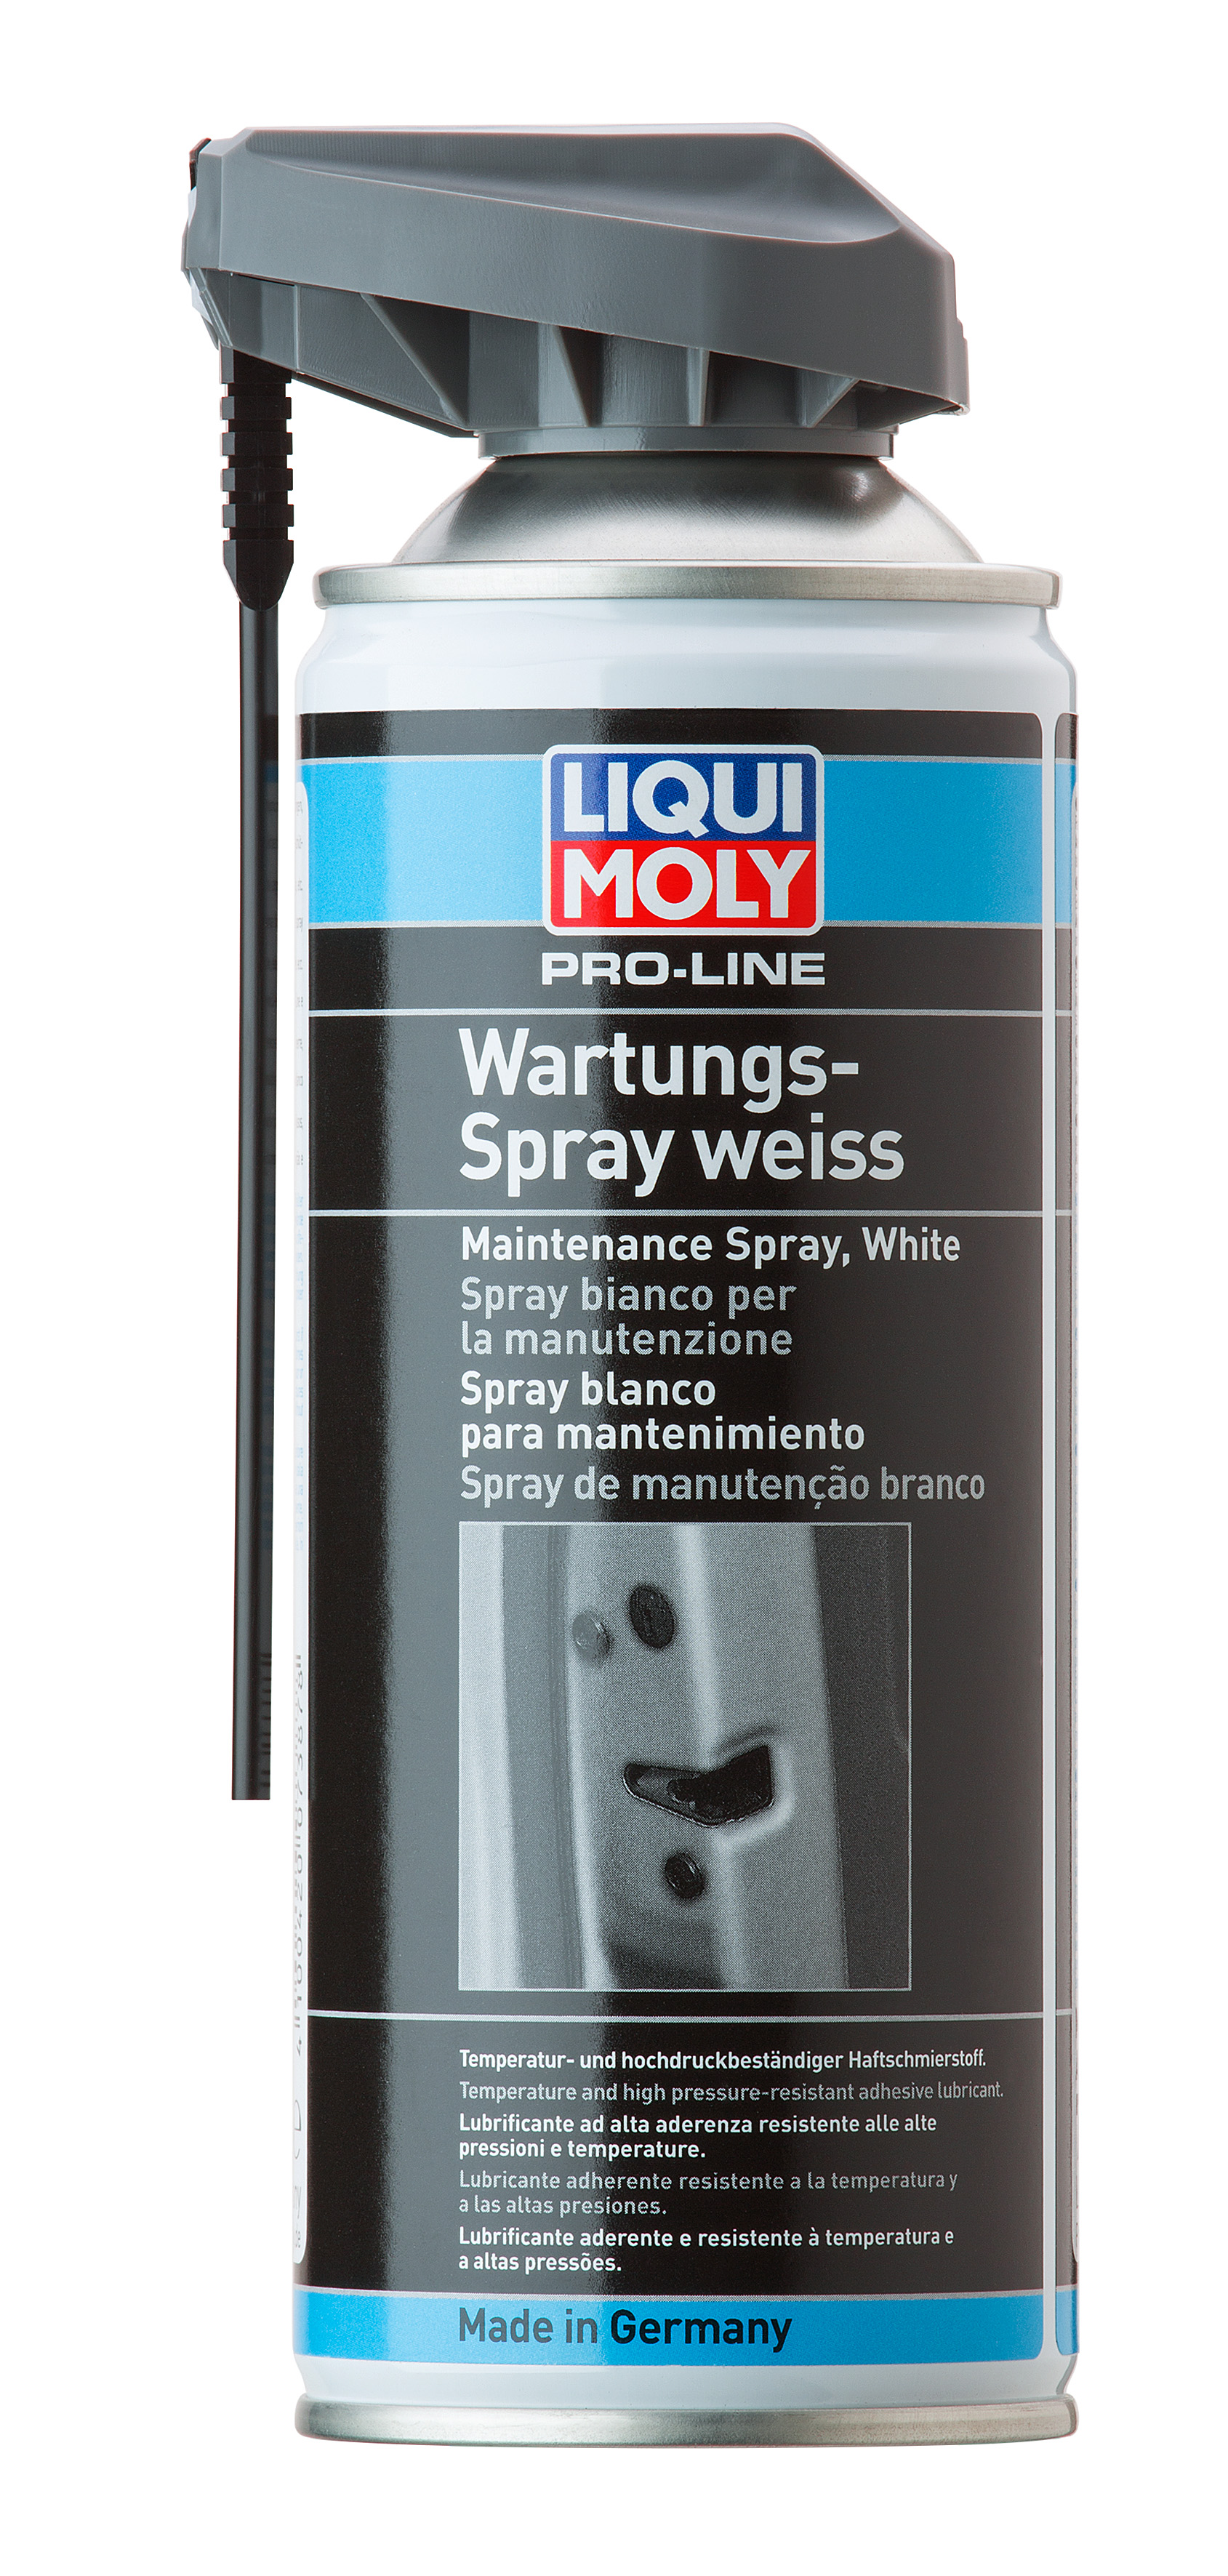 Грязеотталкивающая белая смазка Liqui Moly Pro-Line Wartungs-Spray weiss аэрозольный